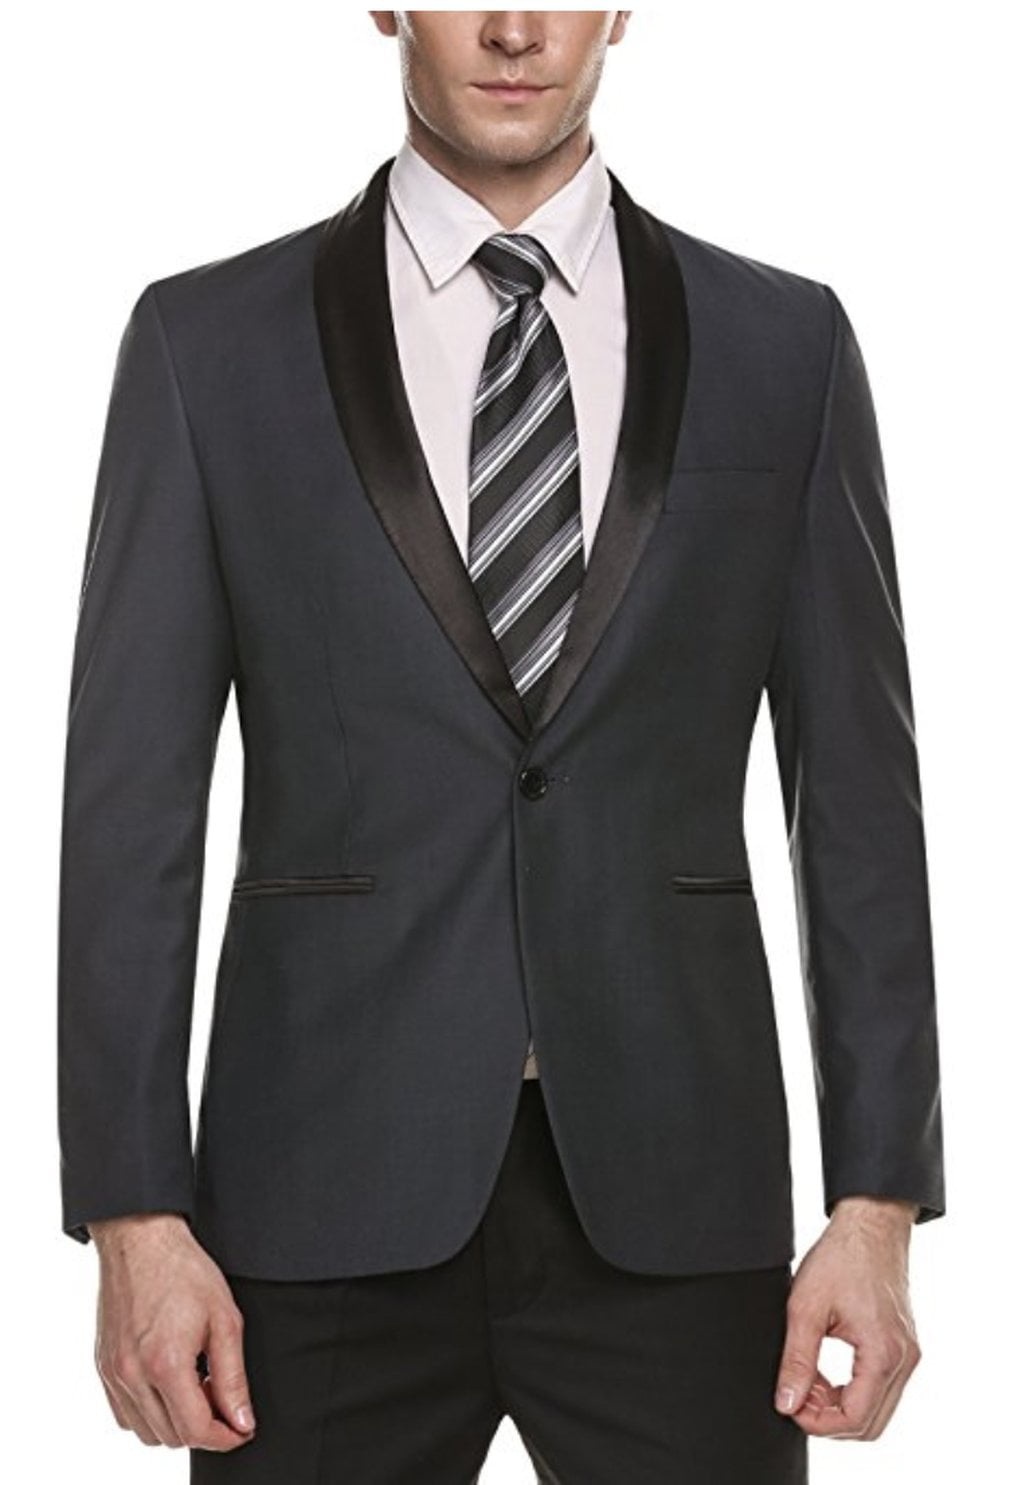 Casual One Formal Button Fit Suit Slim Tops Men Sale Jacket Business Blazer Coat